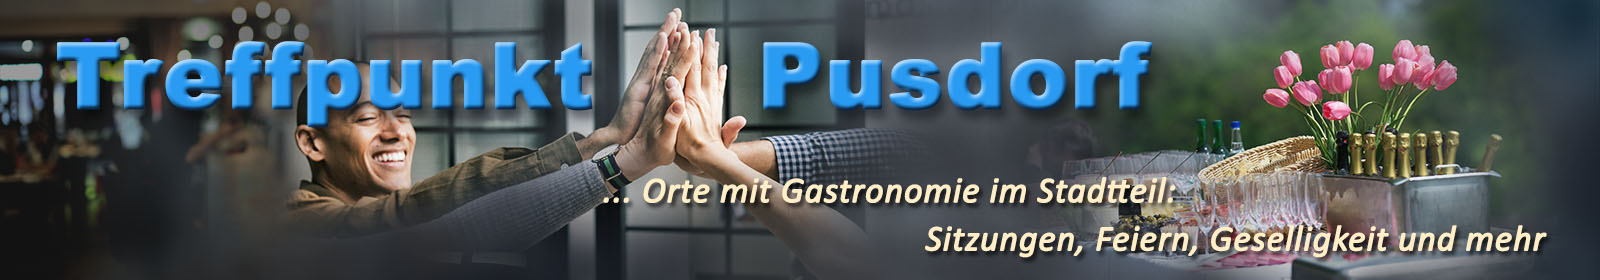 pusdorf.info - Manufaktur Edel & Süß